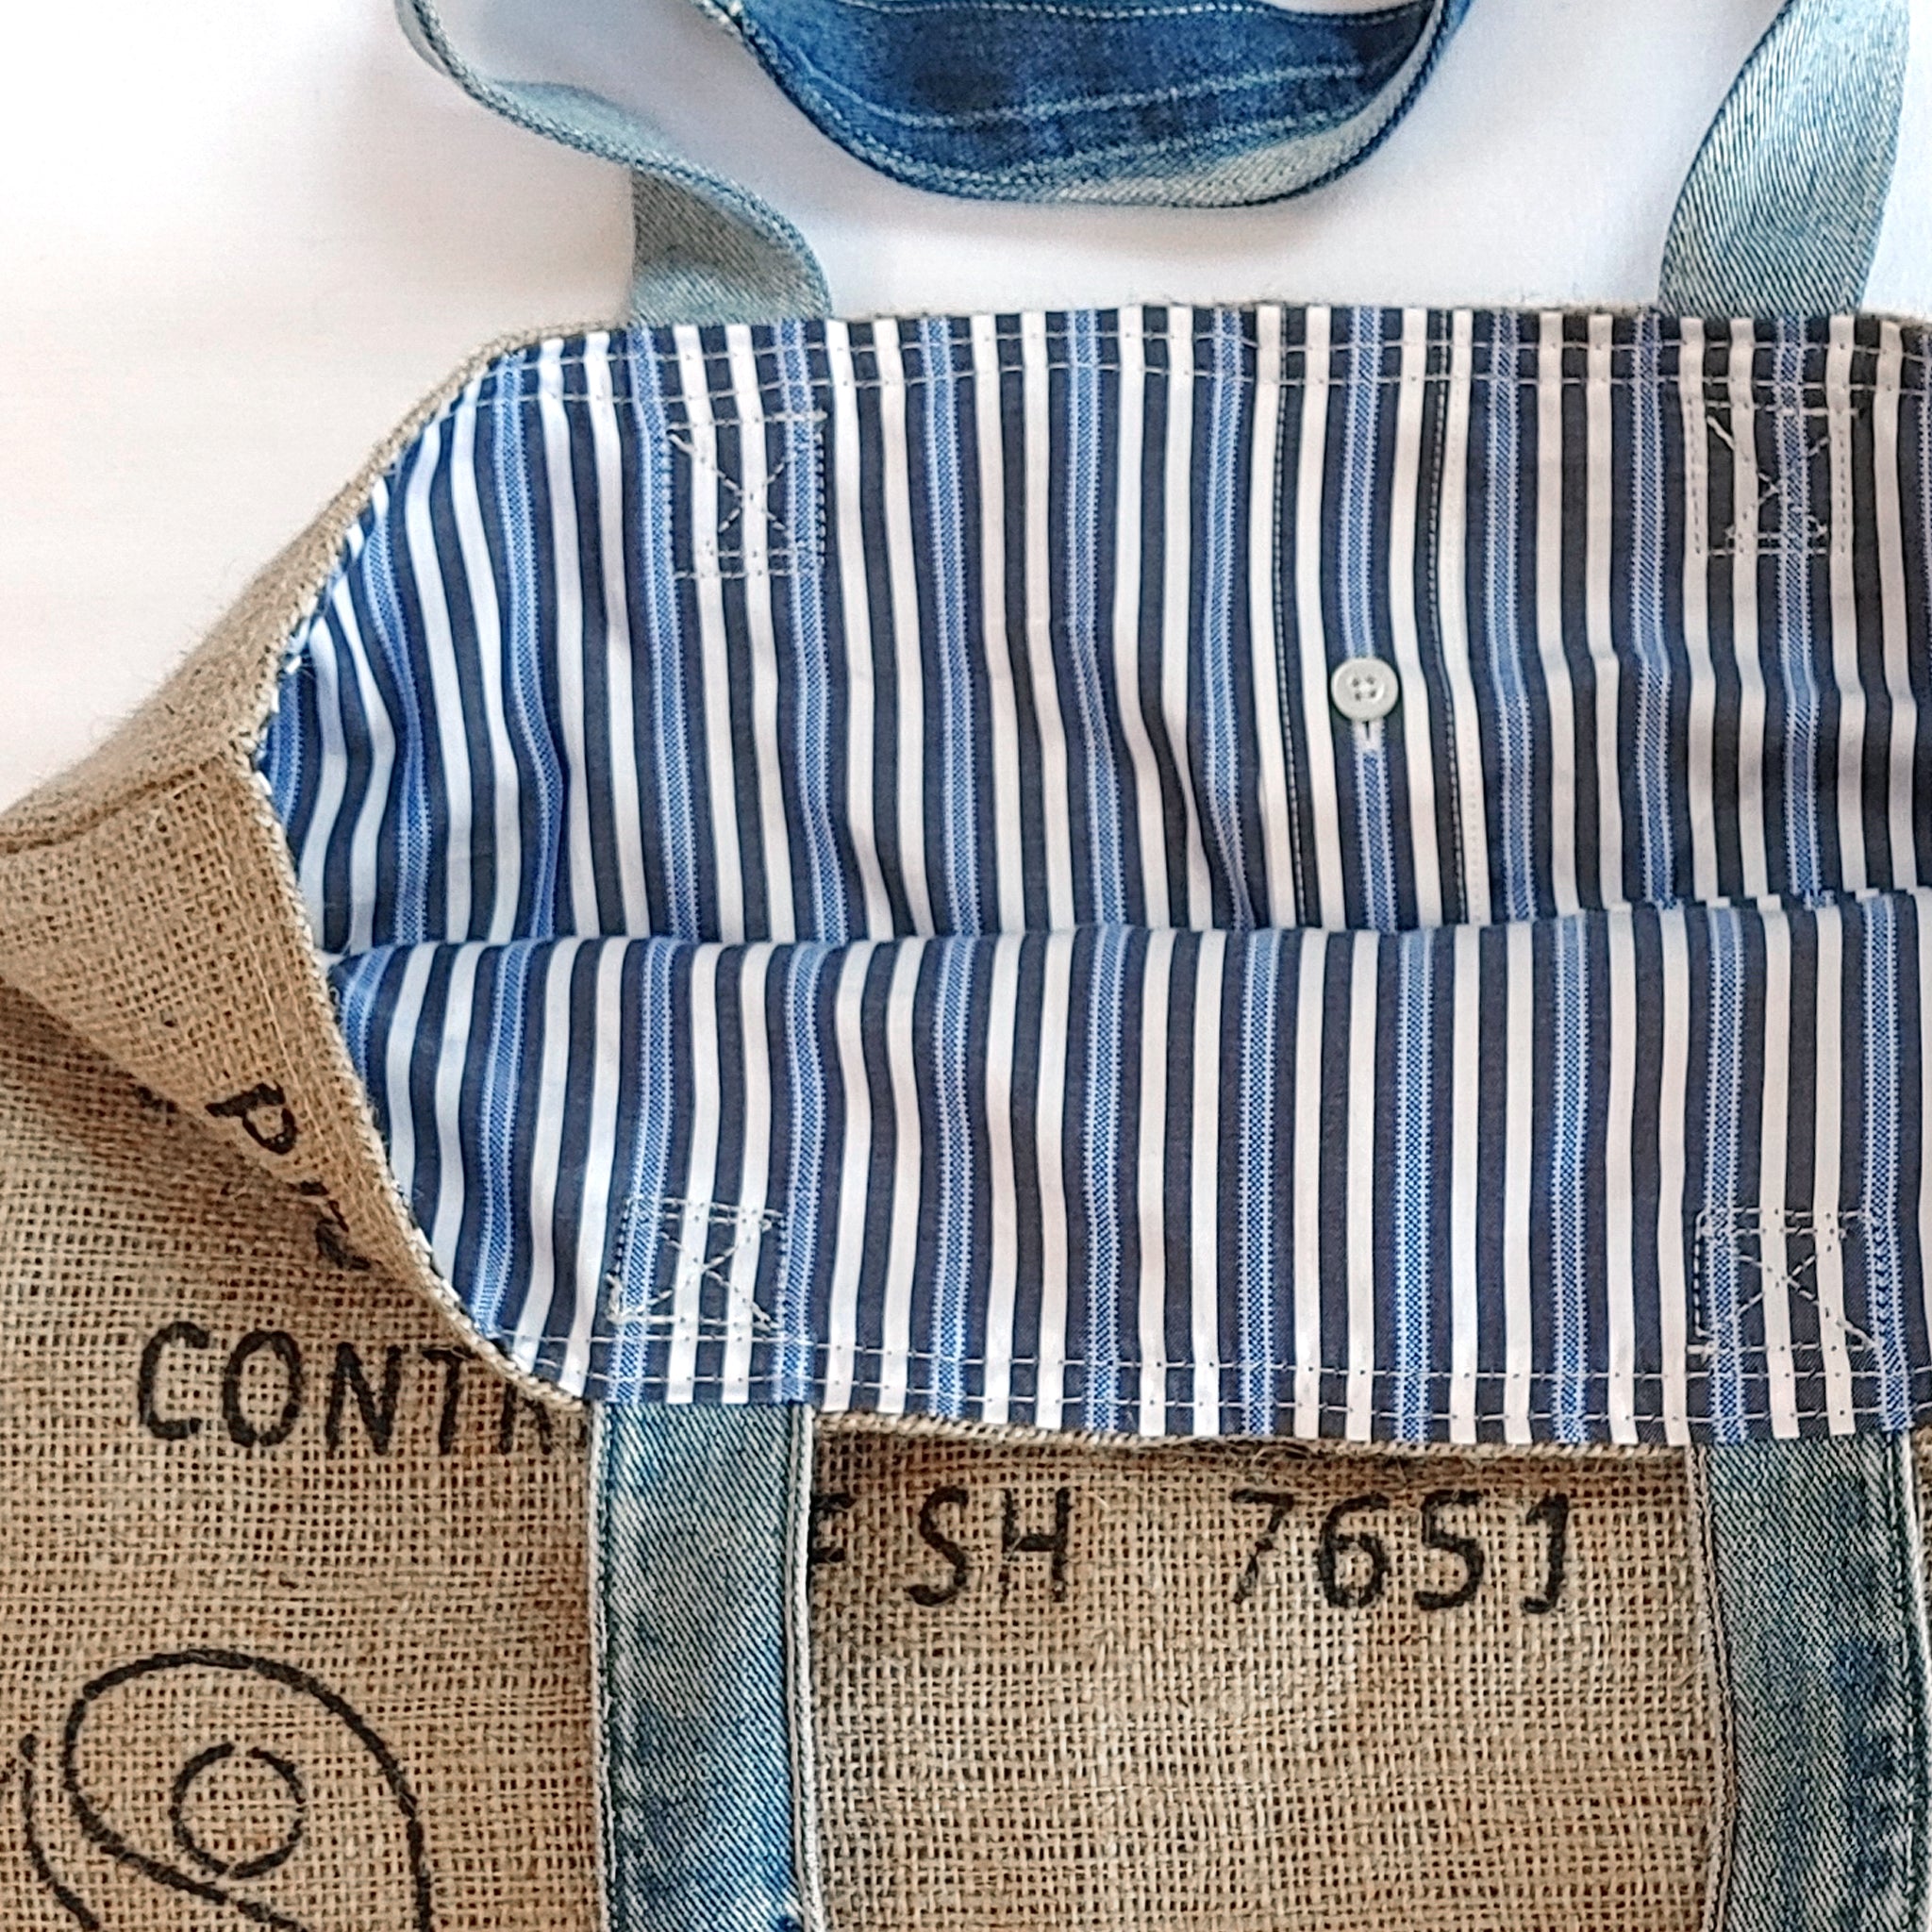 Market Tote Bag – Waist Band Button Strap